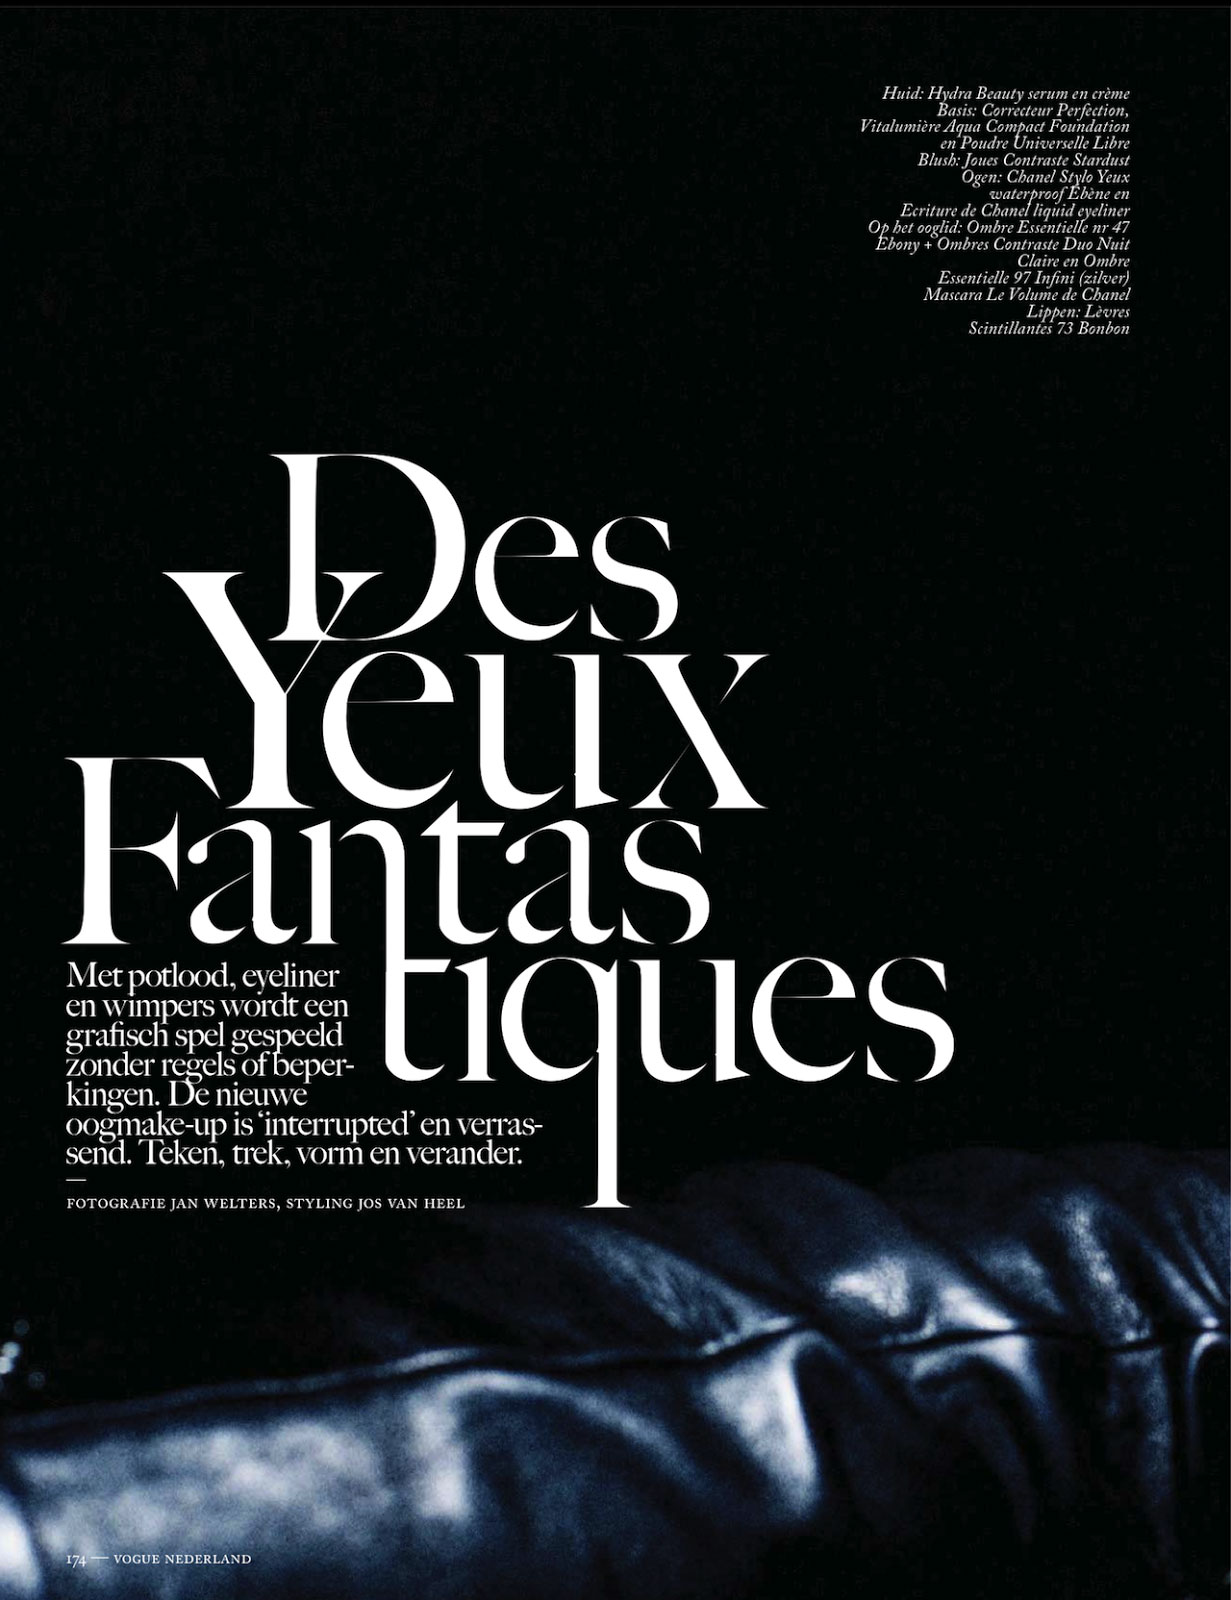 Nimue-Smit-by-Jan-Welters-for-Vogue-Netherlands-April-2013